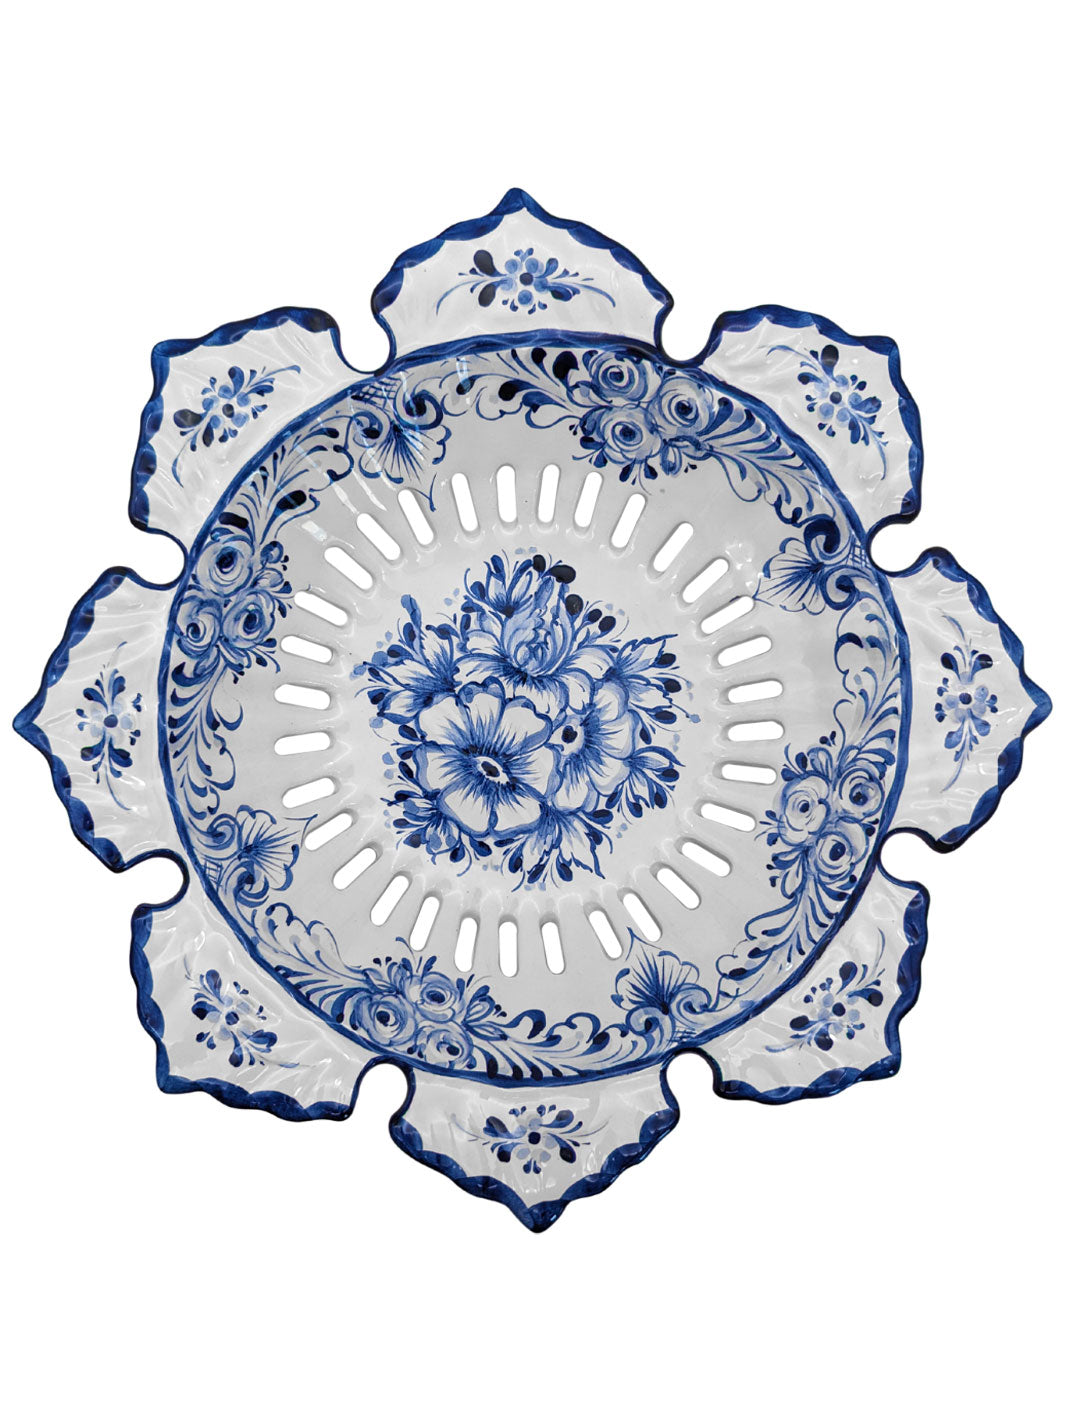 Hand Painted Blue and White Alcobaça Ceramic Decorative Fruit Bowl